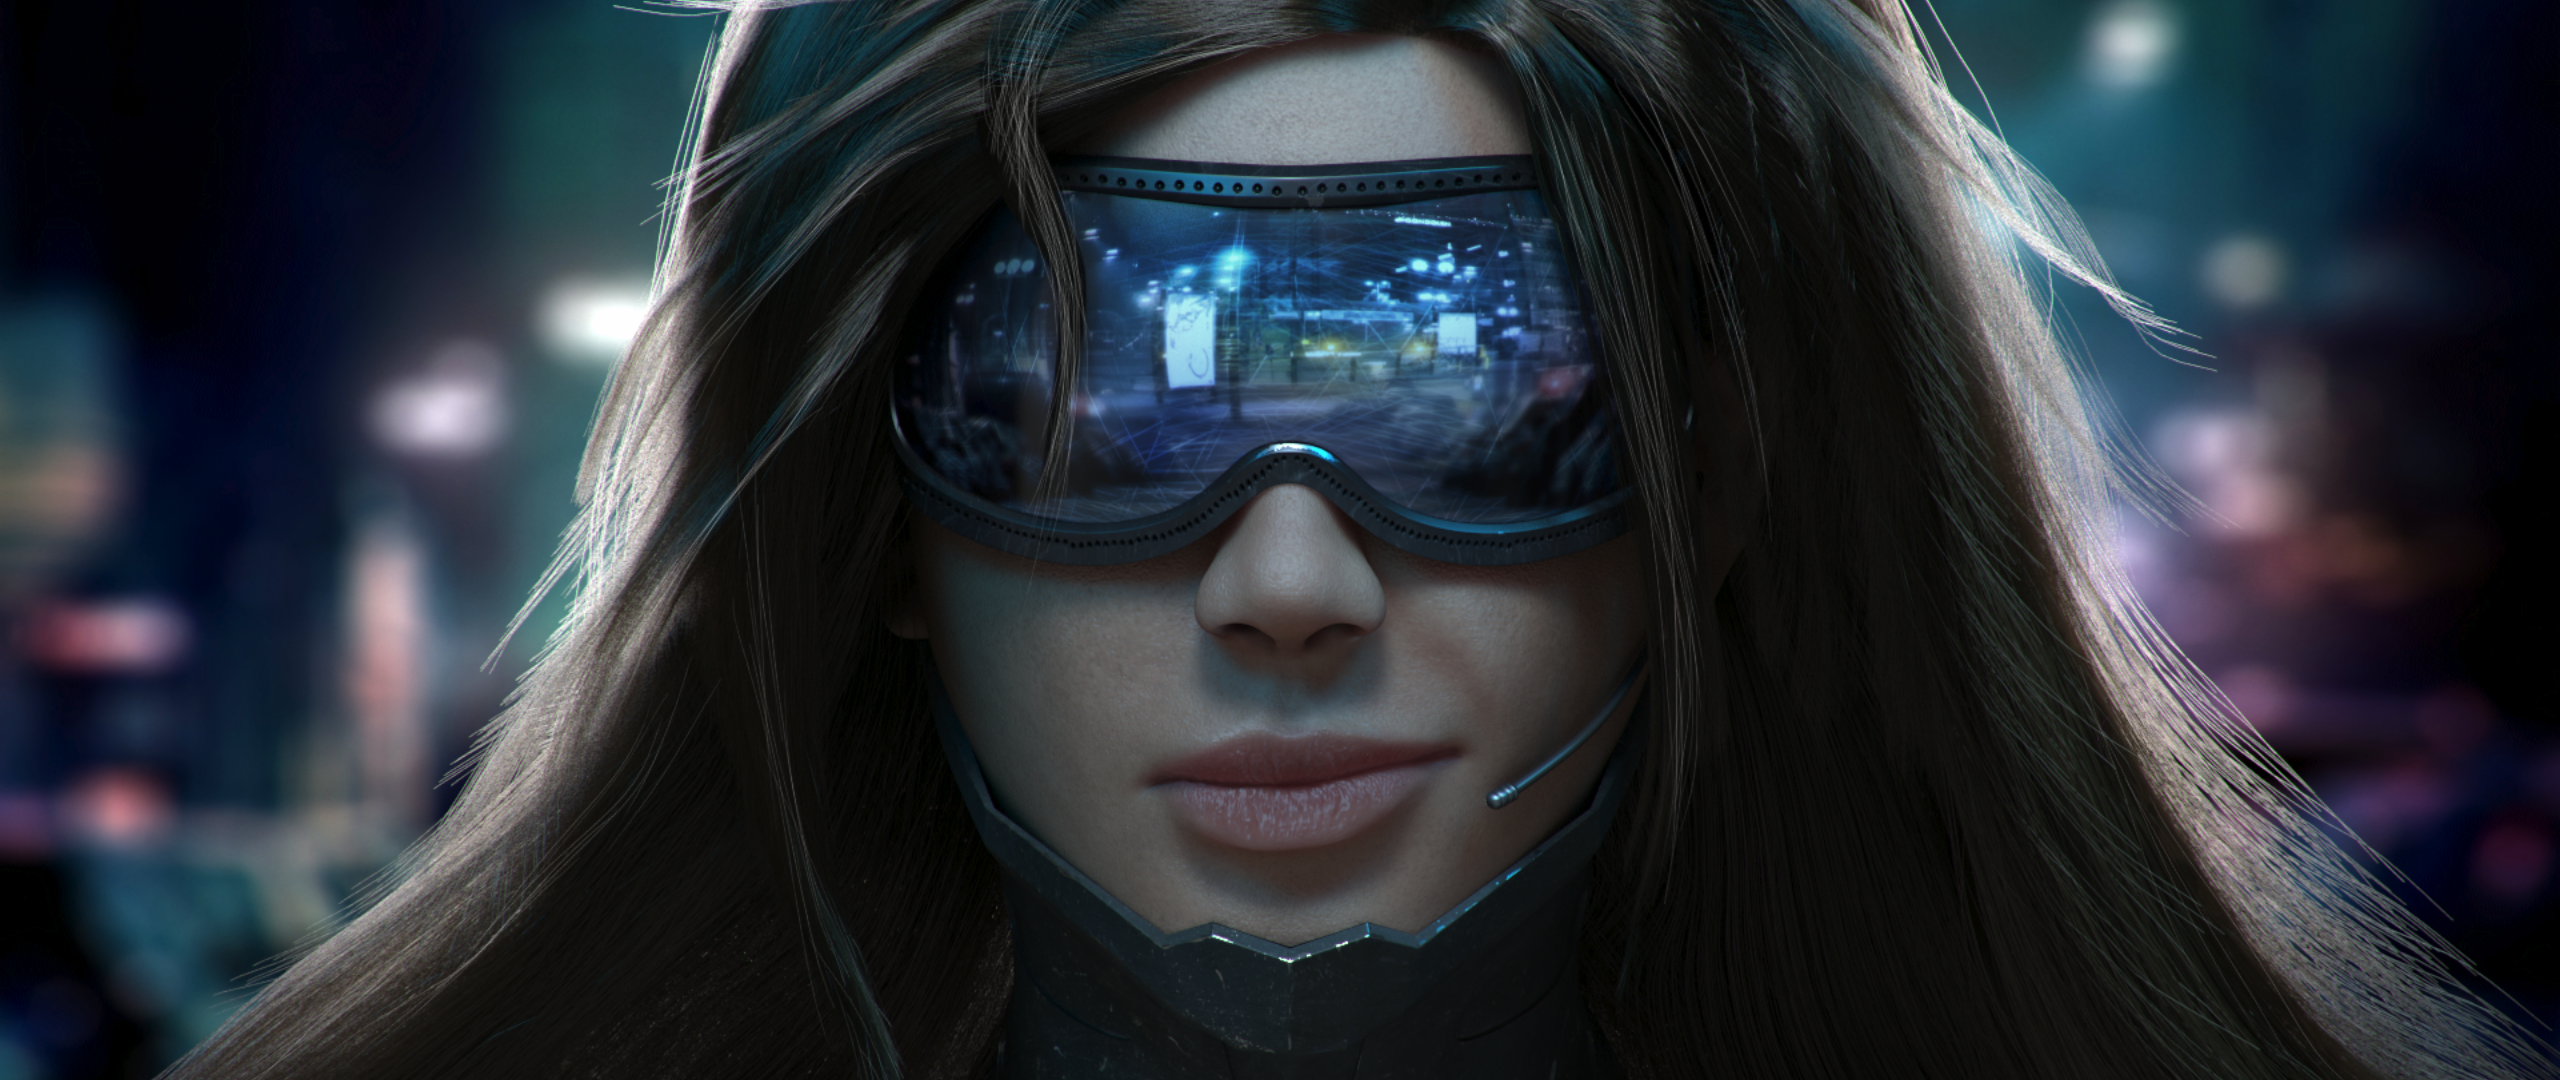 General 2560x1080 futuristic cyberpunk ultrawide science fiction artwork brunette face closeup reflection